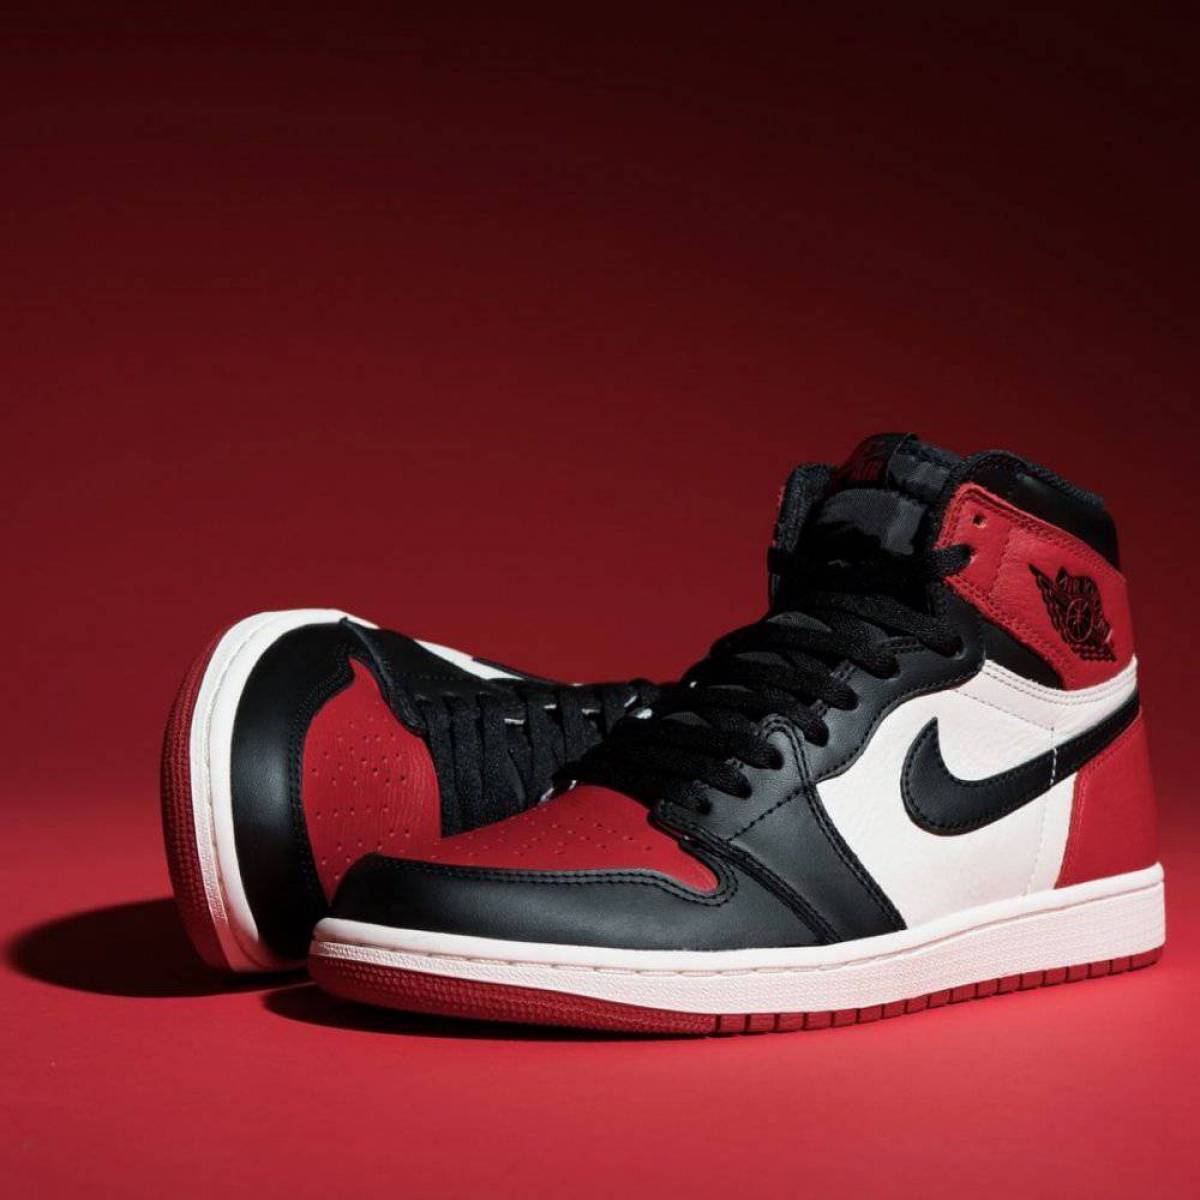 Nike jordan кроссовки. Nike Air Jordan 1 bred Toe. Найк Air Jordan. Nike Air Jordan 1 Retro High bred Toe. Nike ar Jordan 1.